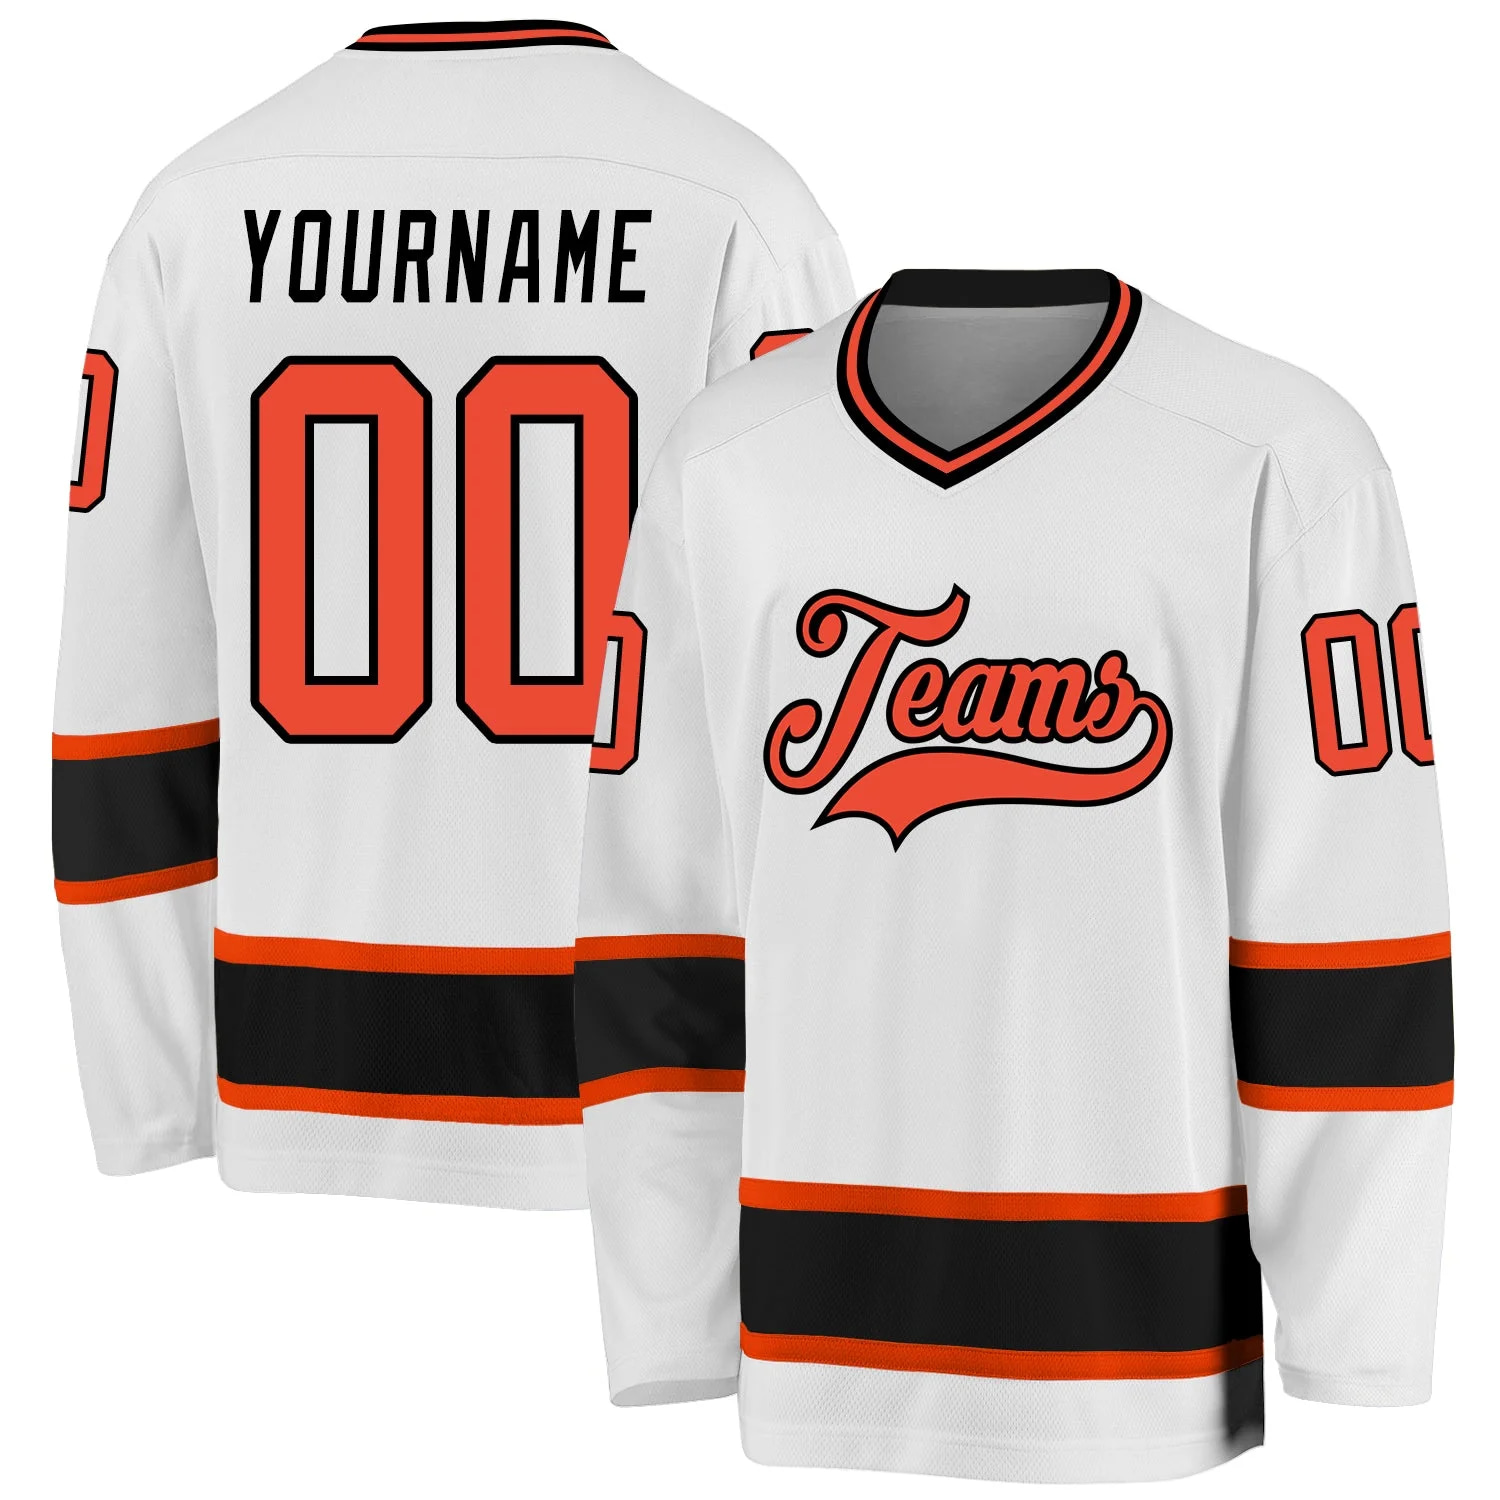 Stitched And Print White Orange-black Hockey Jersey Custom